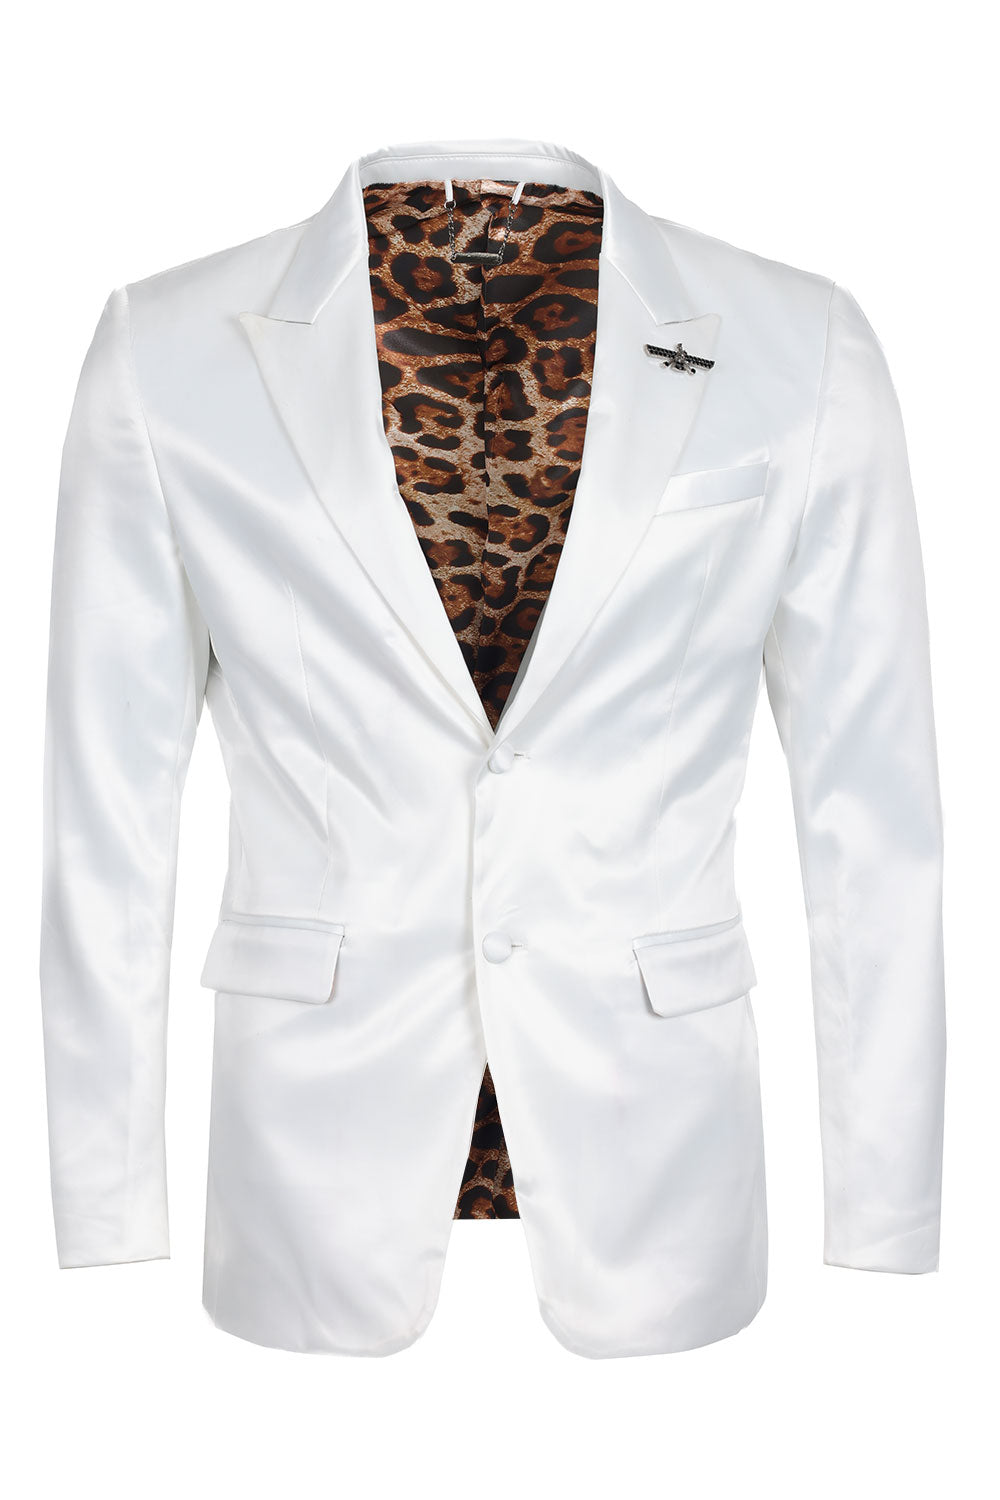 Barabas Men's Solid Color Satin Metallic Shine Luxury Blazer 2BL1010 White